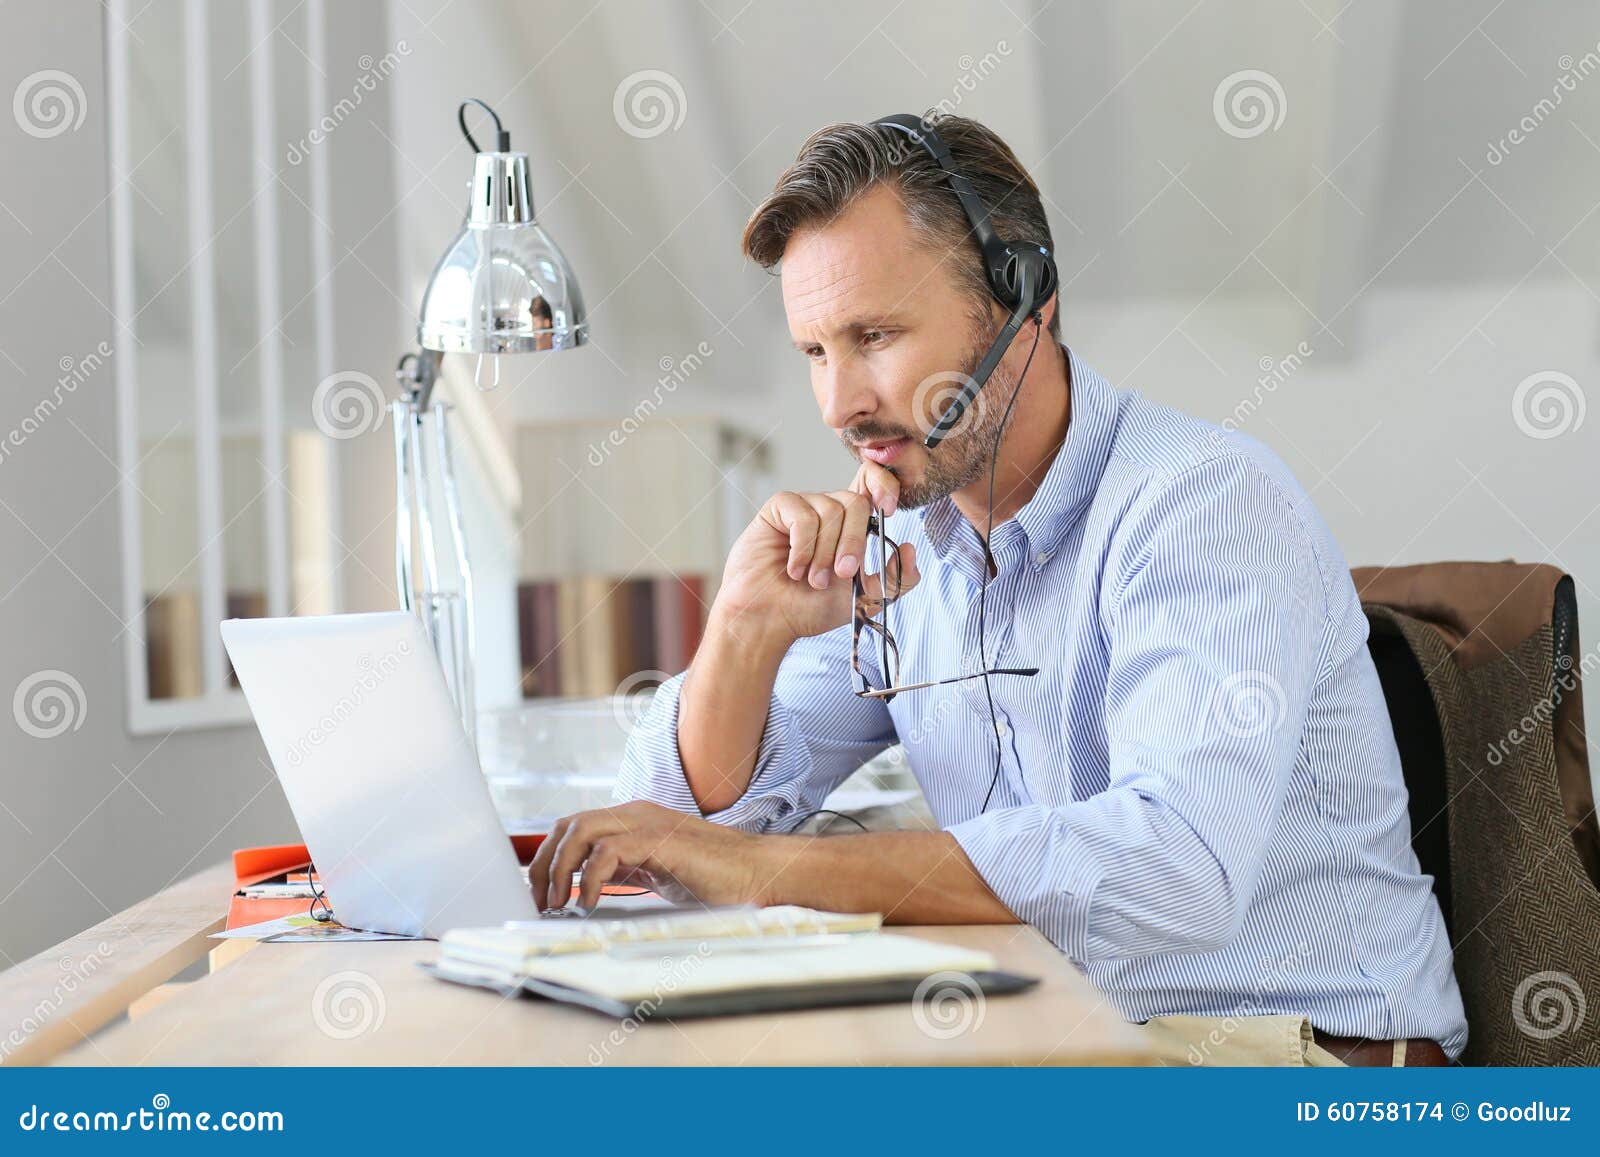 businessman teleworking on laptop